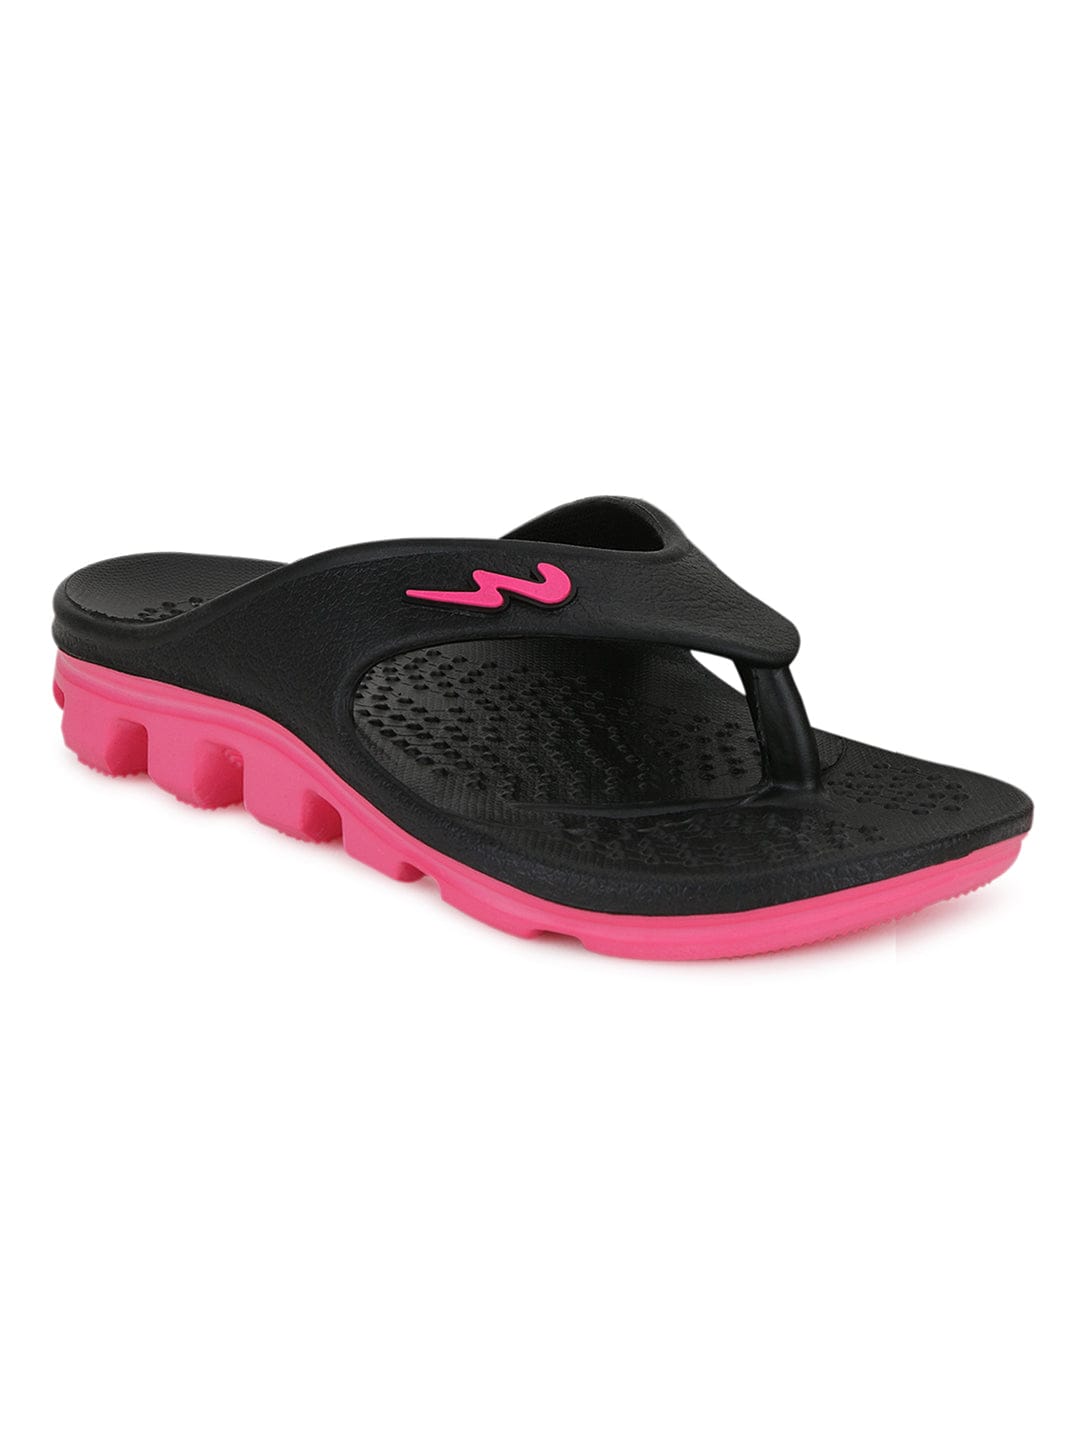 Buy Flip-Flop For Women: Flipblk-Pink